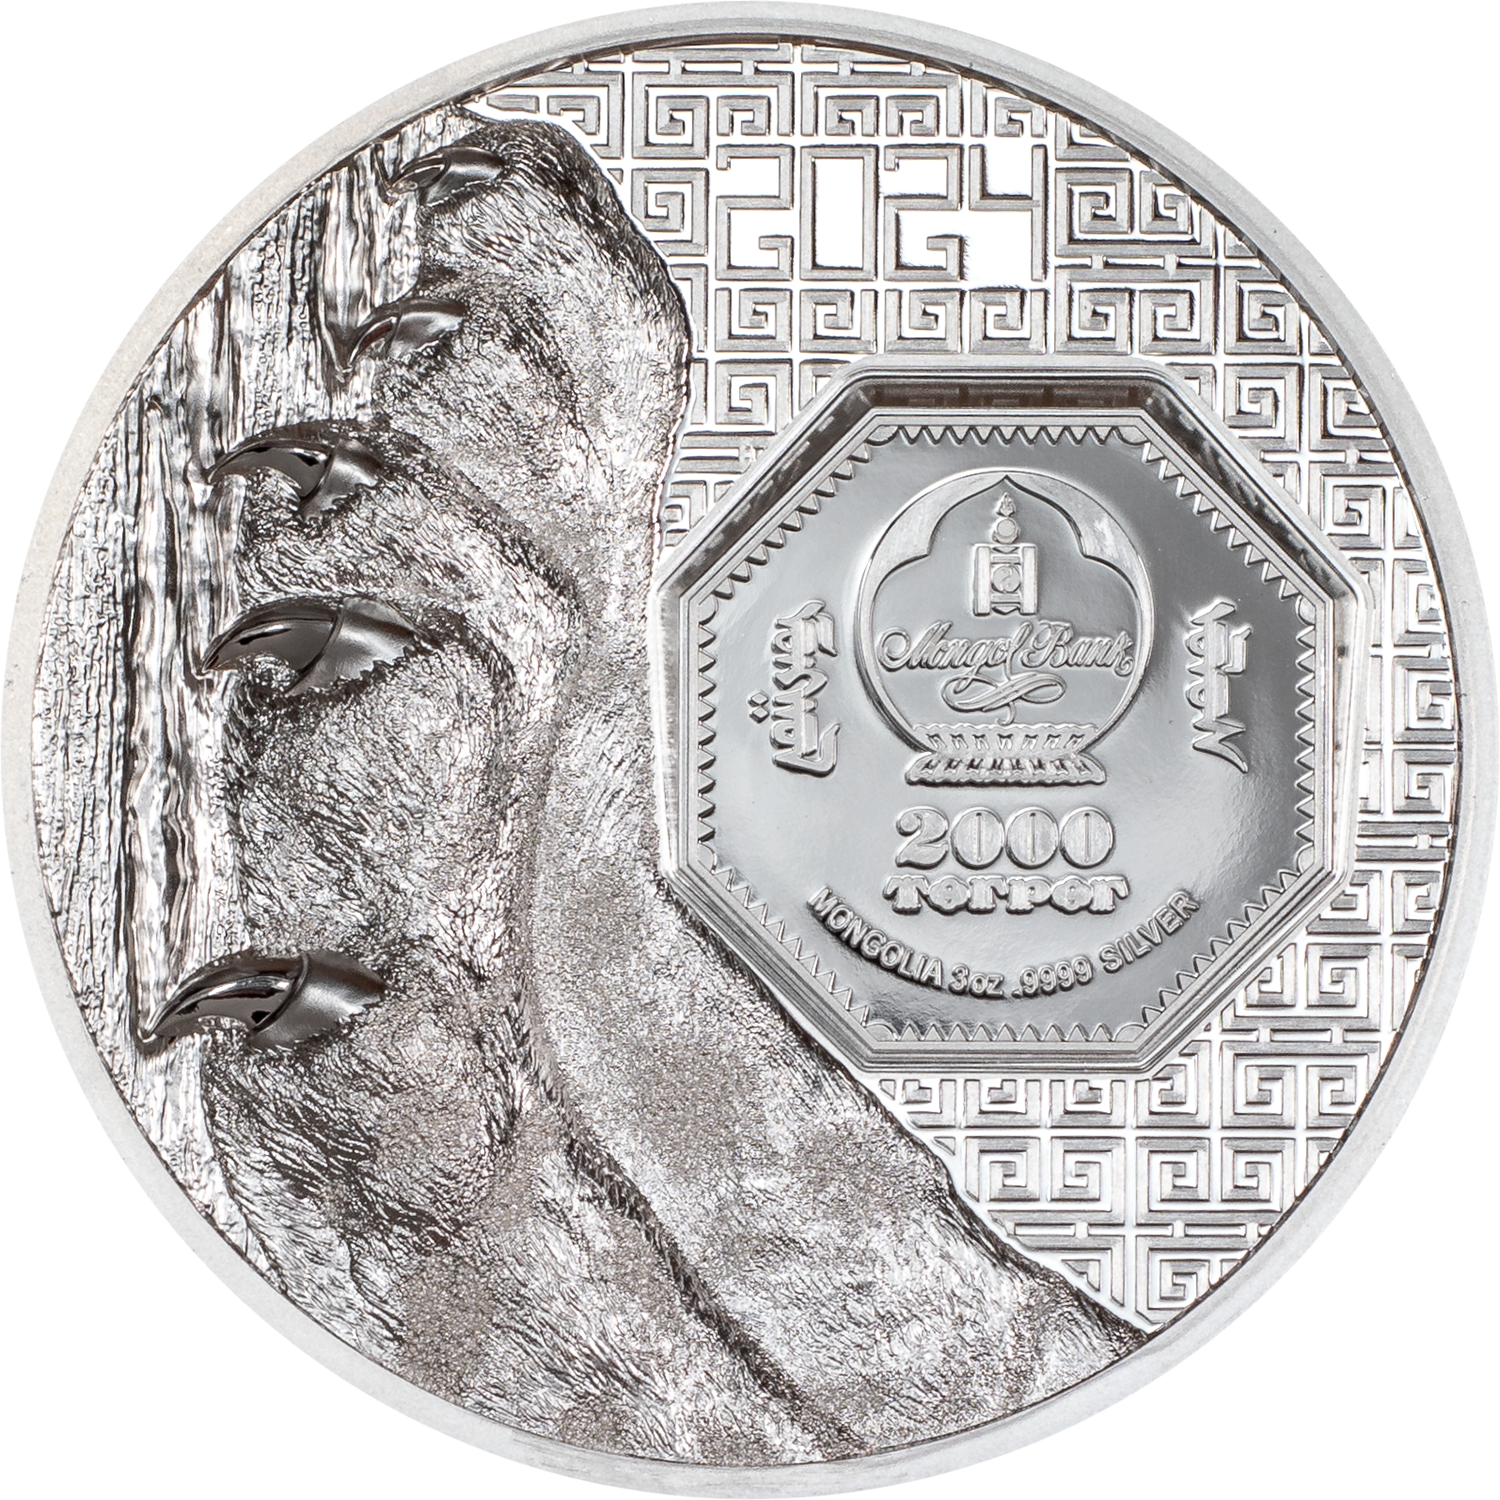 SNOW LEOPARD Wild Mongolia 3 Oz Silver Coin 2000 Togrog Mongolia 2024